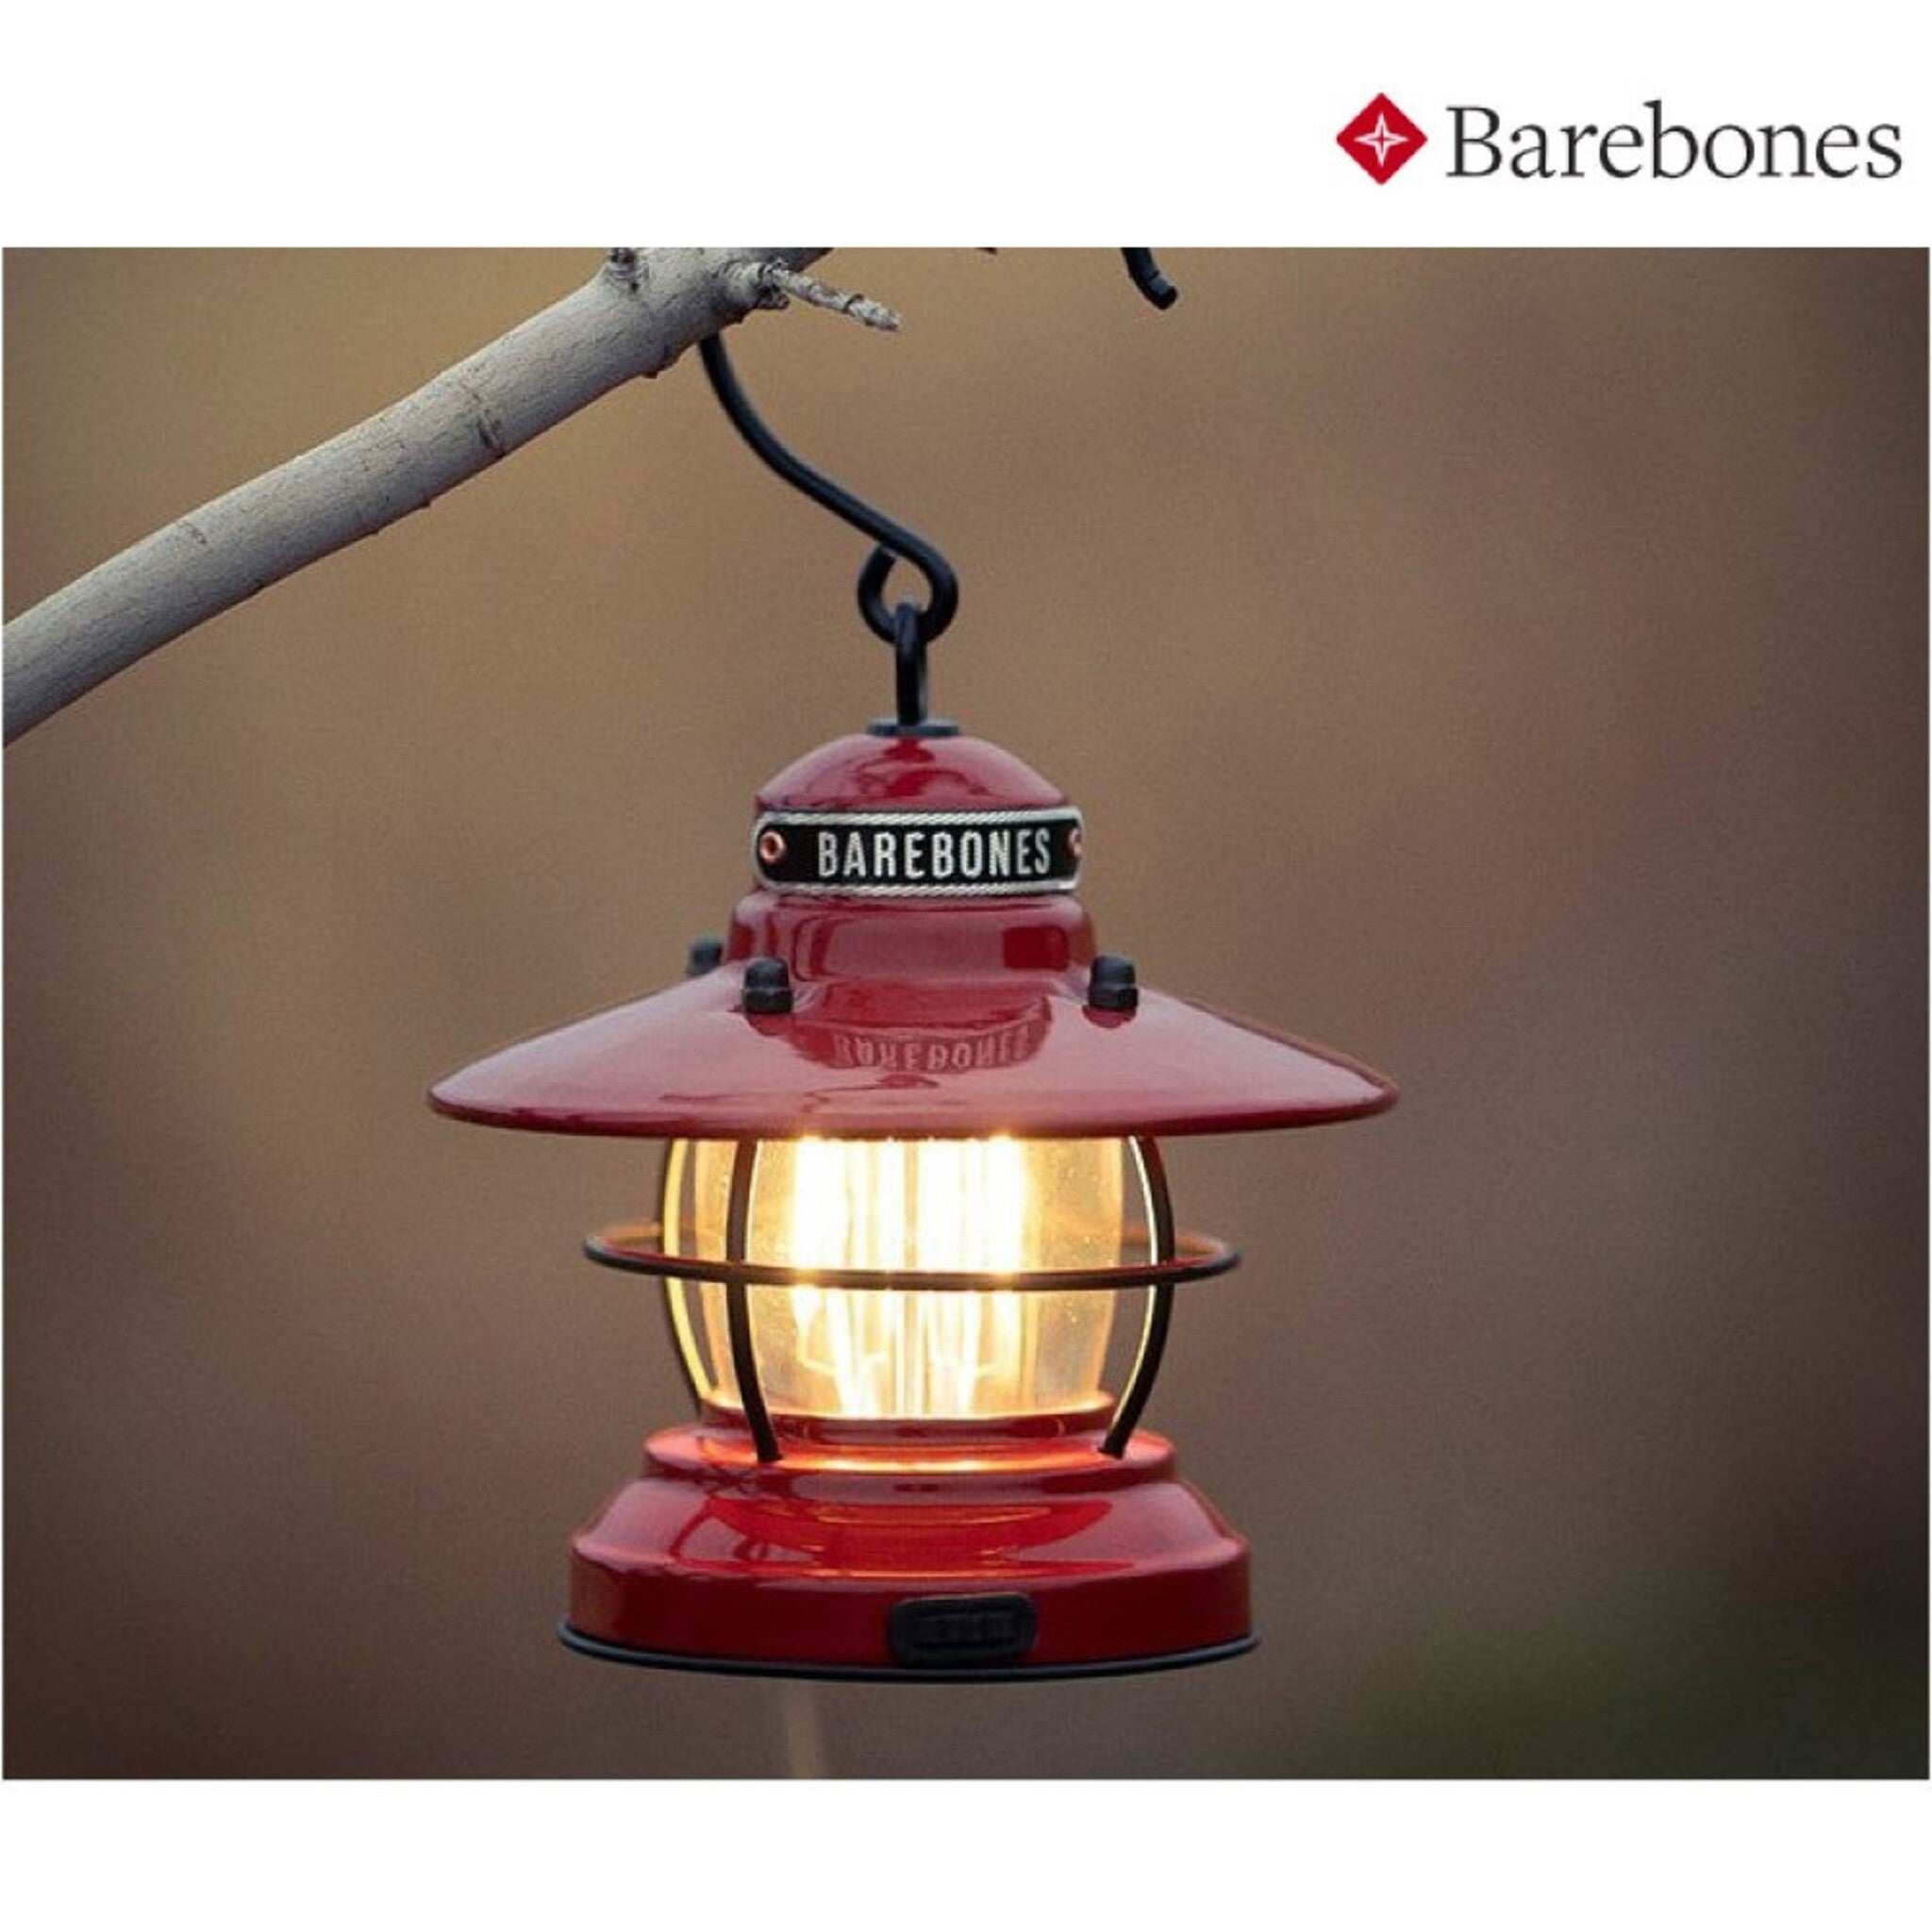 Barebones Edison Mini Lantern 平放/吊掛營燈 紅色 LIV-274